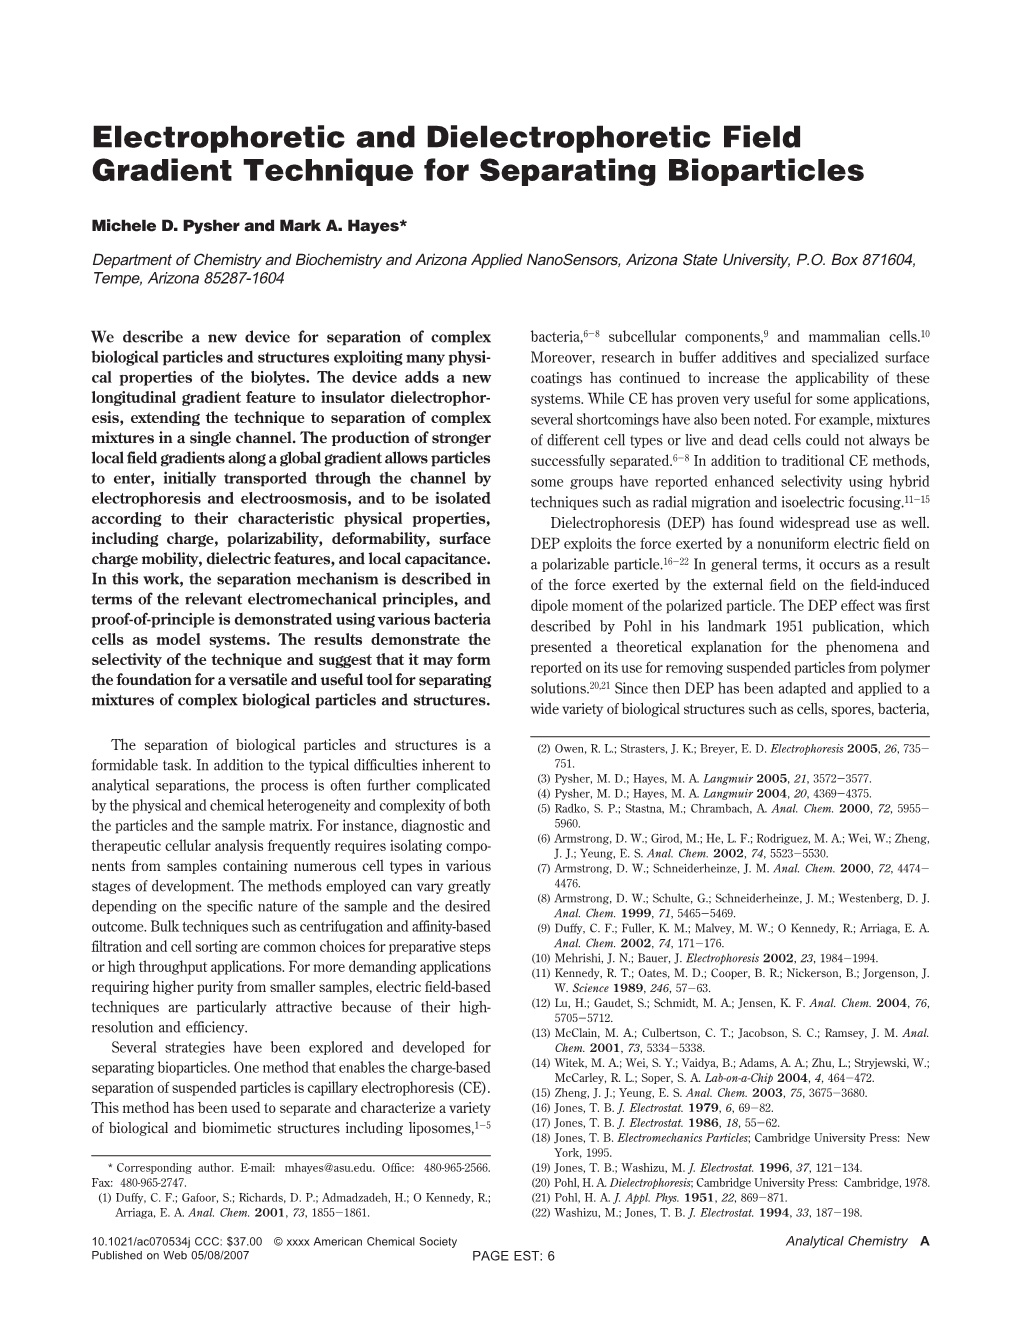 Electrophoretic and Dielectrophoretic Field Gradient Technique for Separating Bioparticles